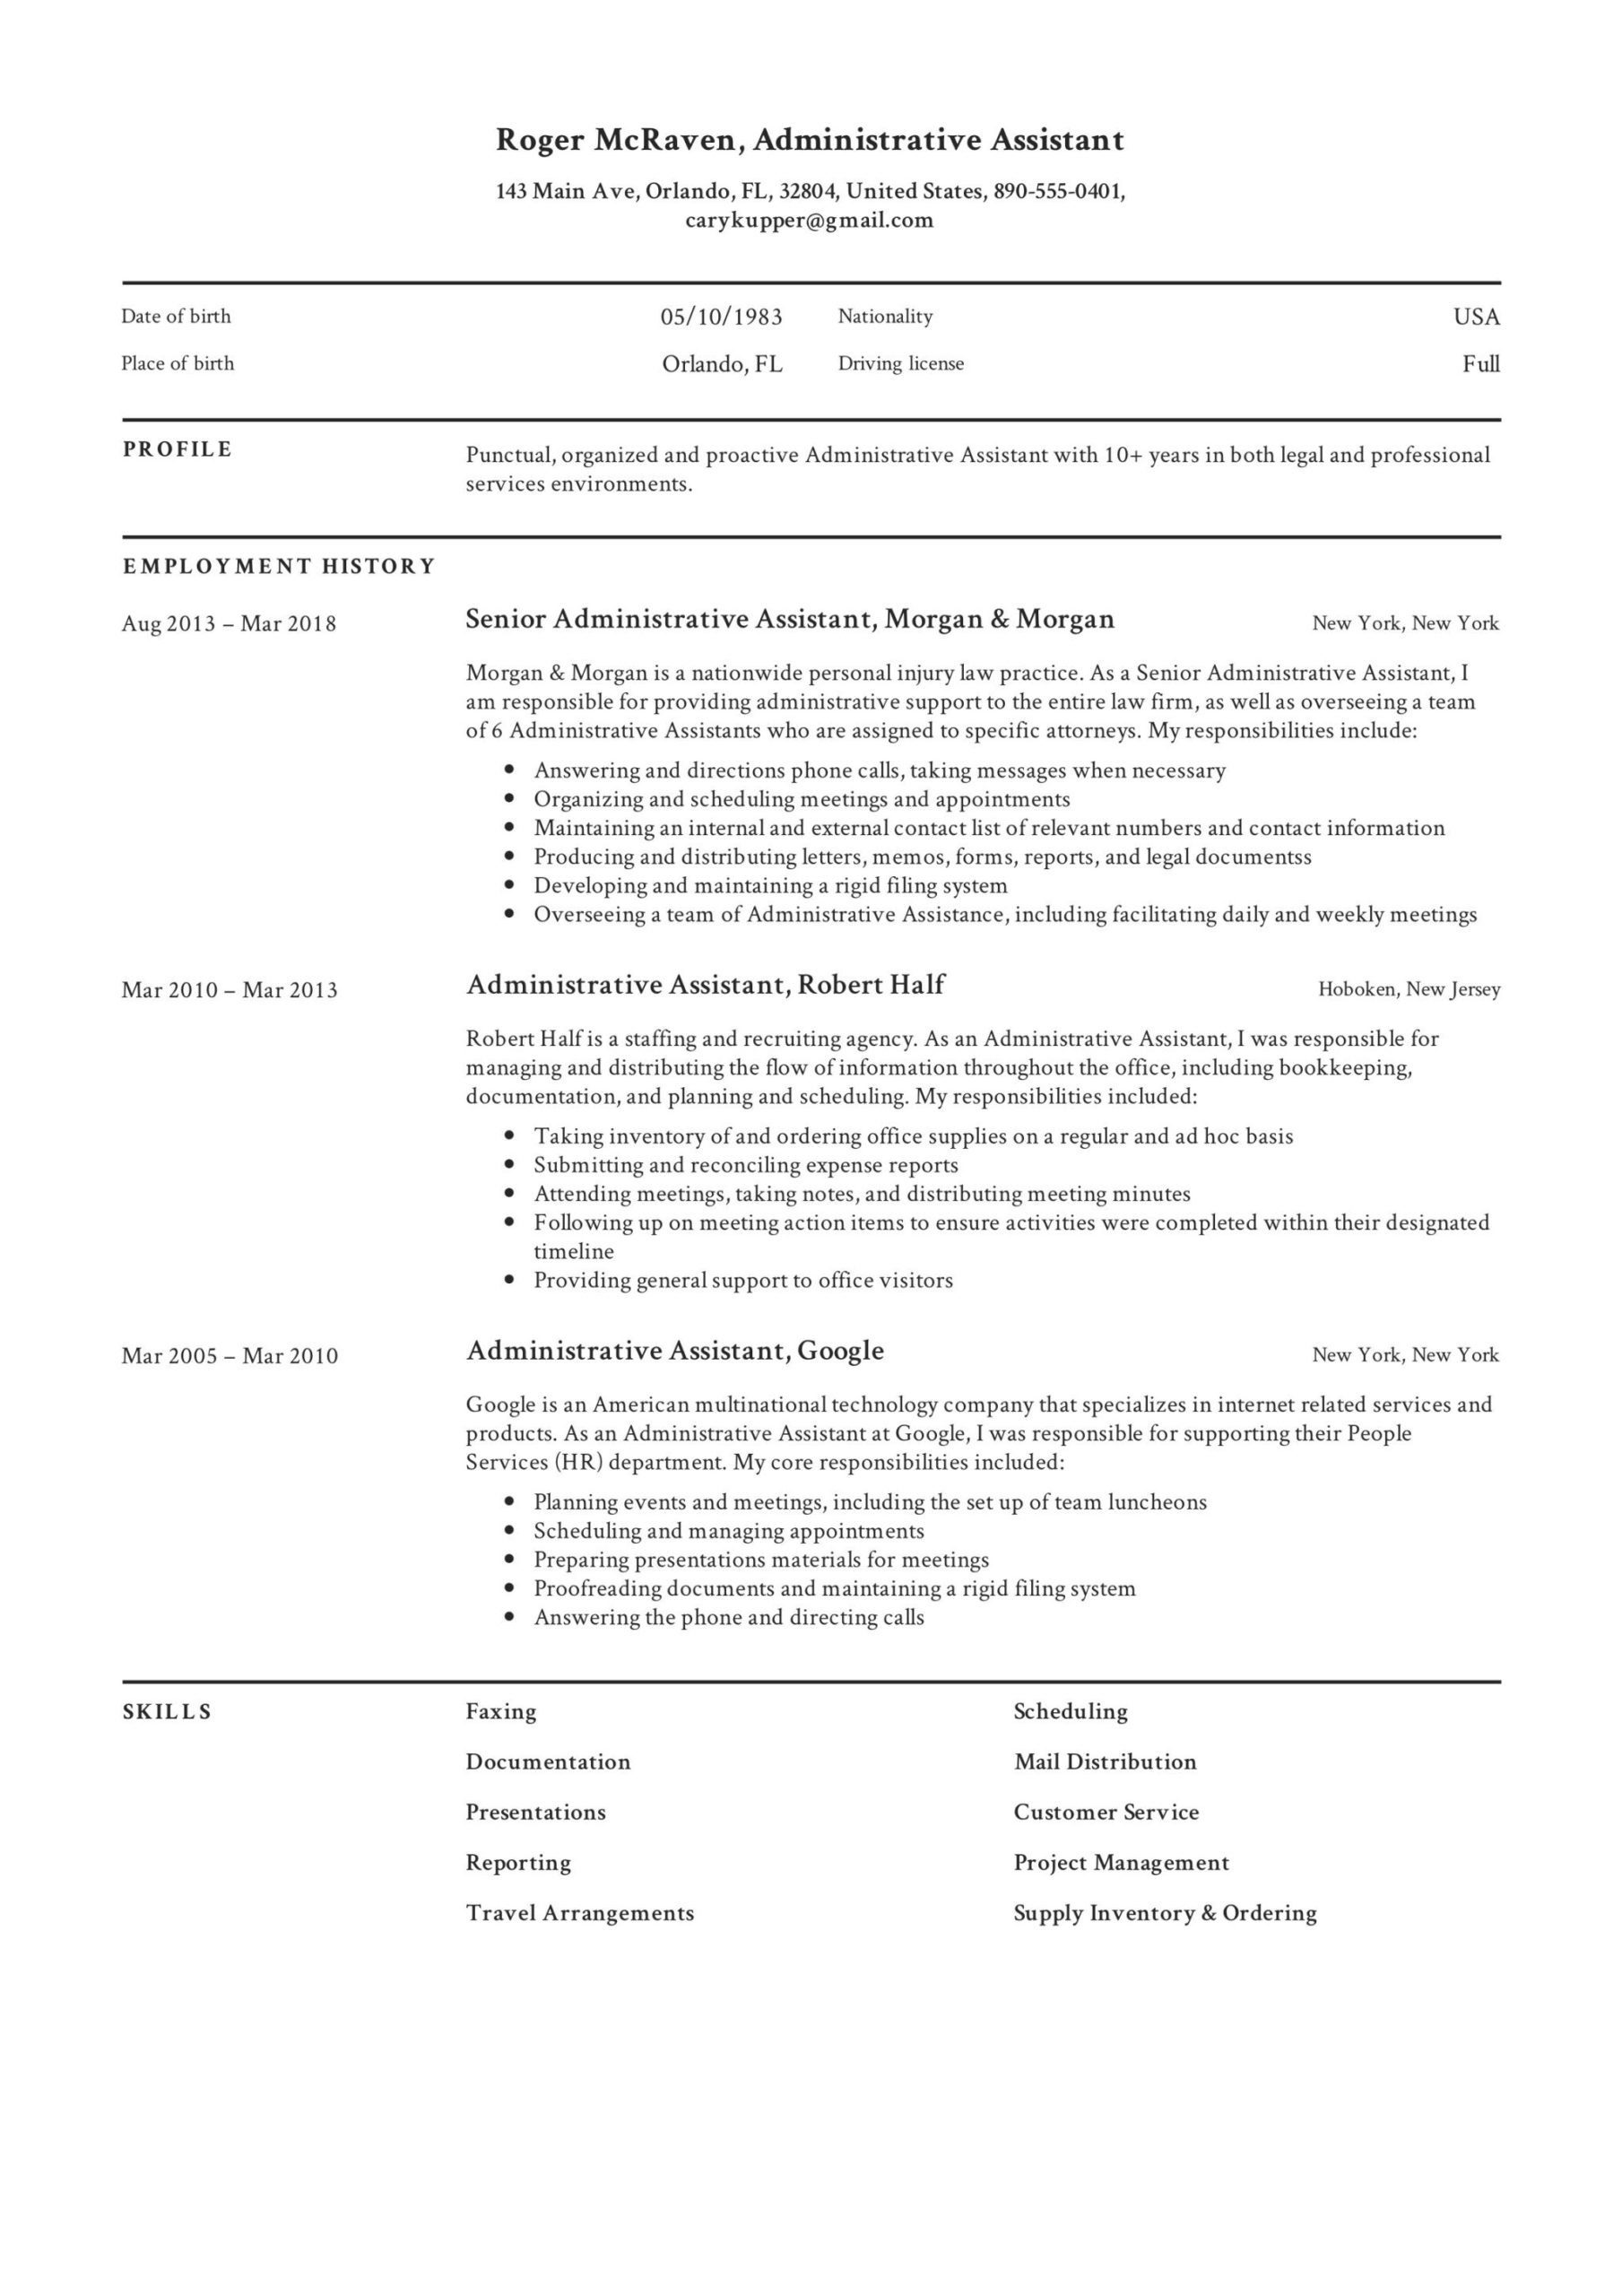 Sample Accomplishments for Administrative assistant Resume 19 Administrative assistant Resumes & Guide Pdf 2022